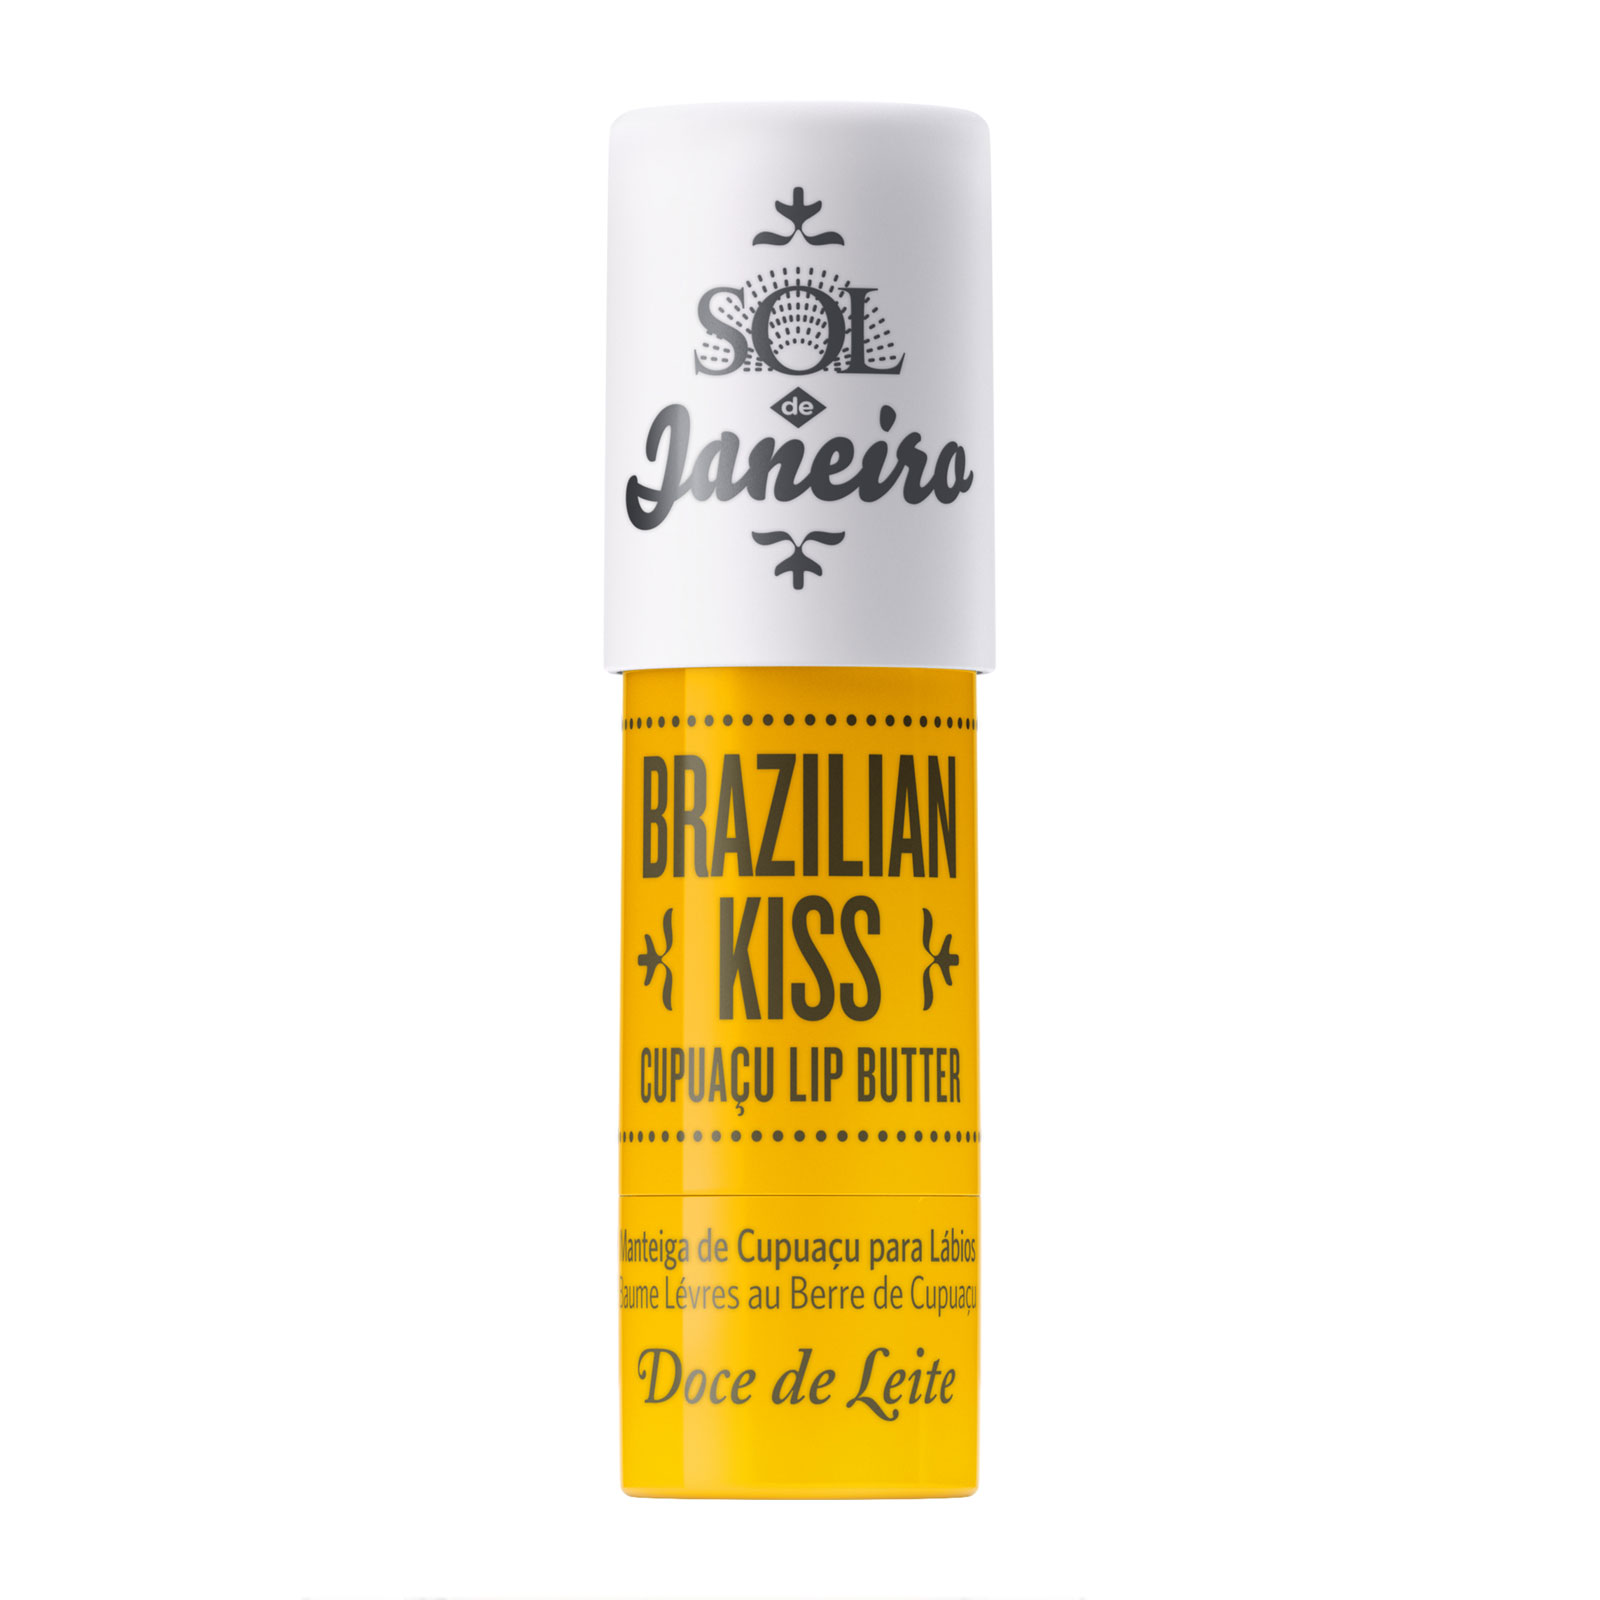 Sol de Janeiro Brazilian Kiss Cupua�u Lip Butter 6.2g